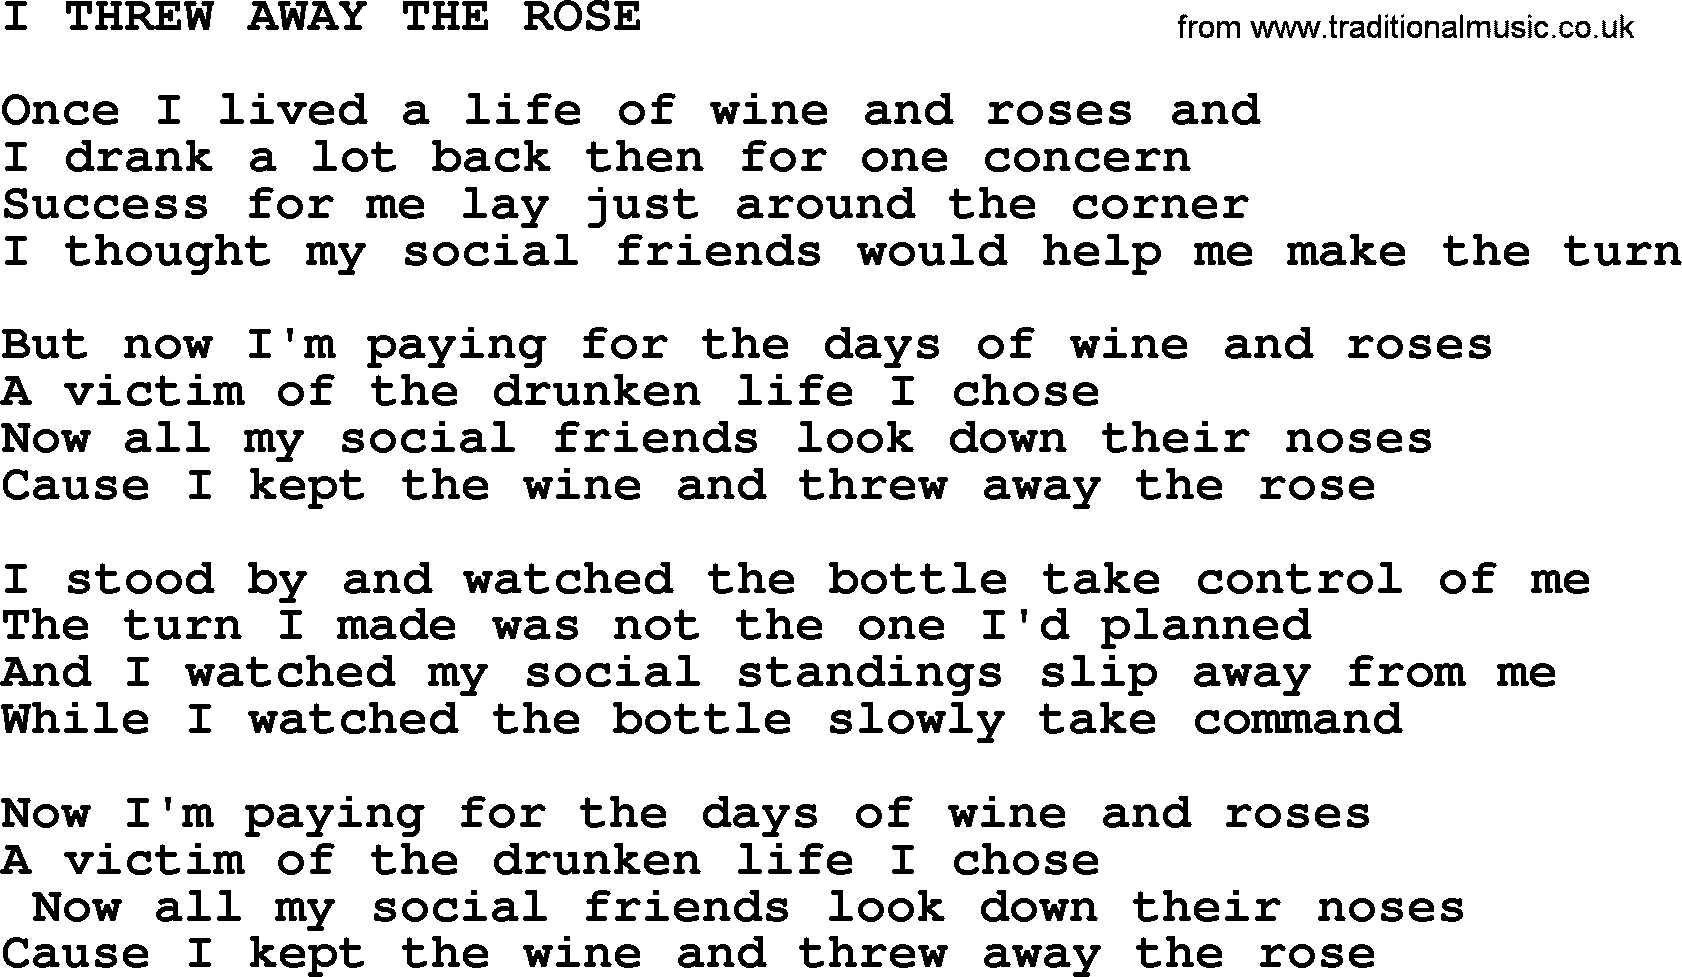 Merle Haggard song: I Threw Away The Rose, lyrics.